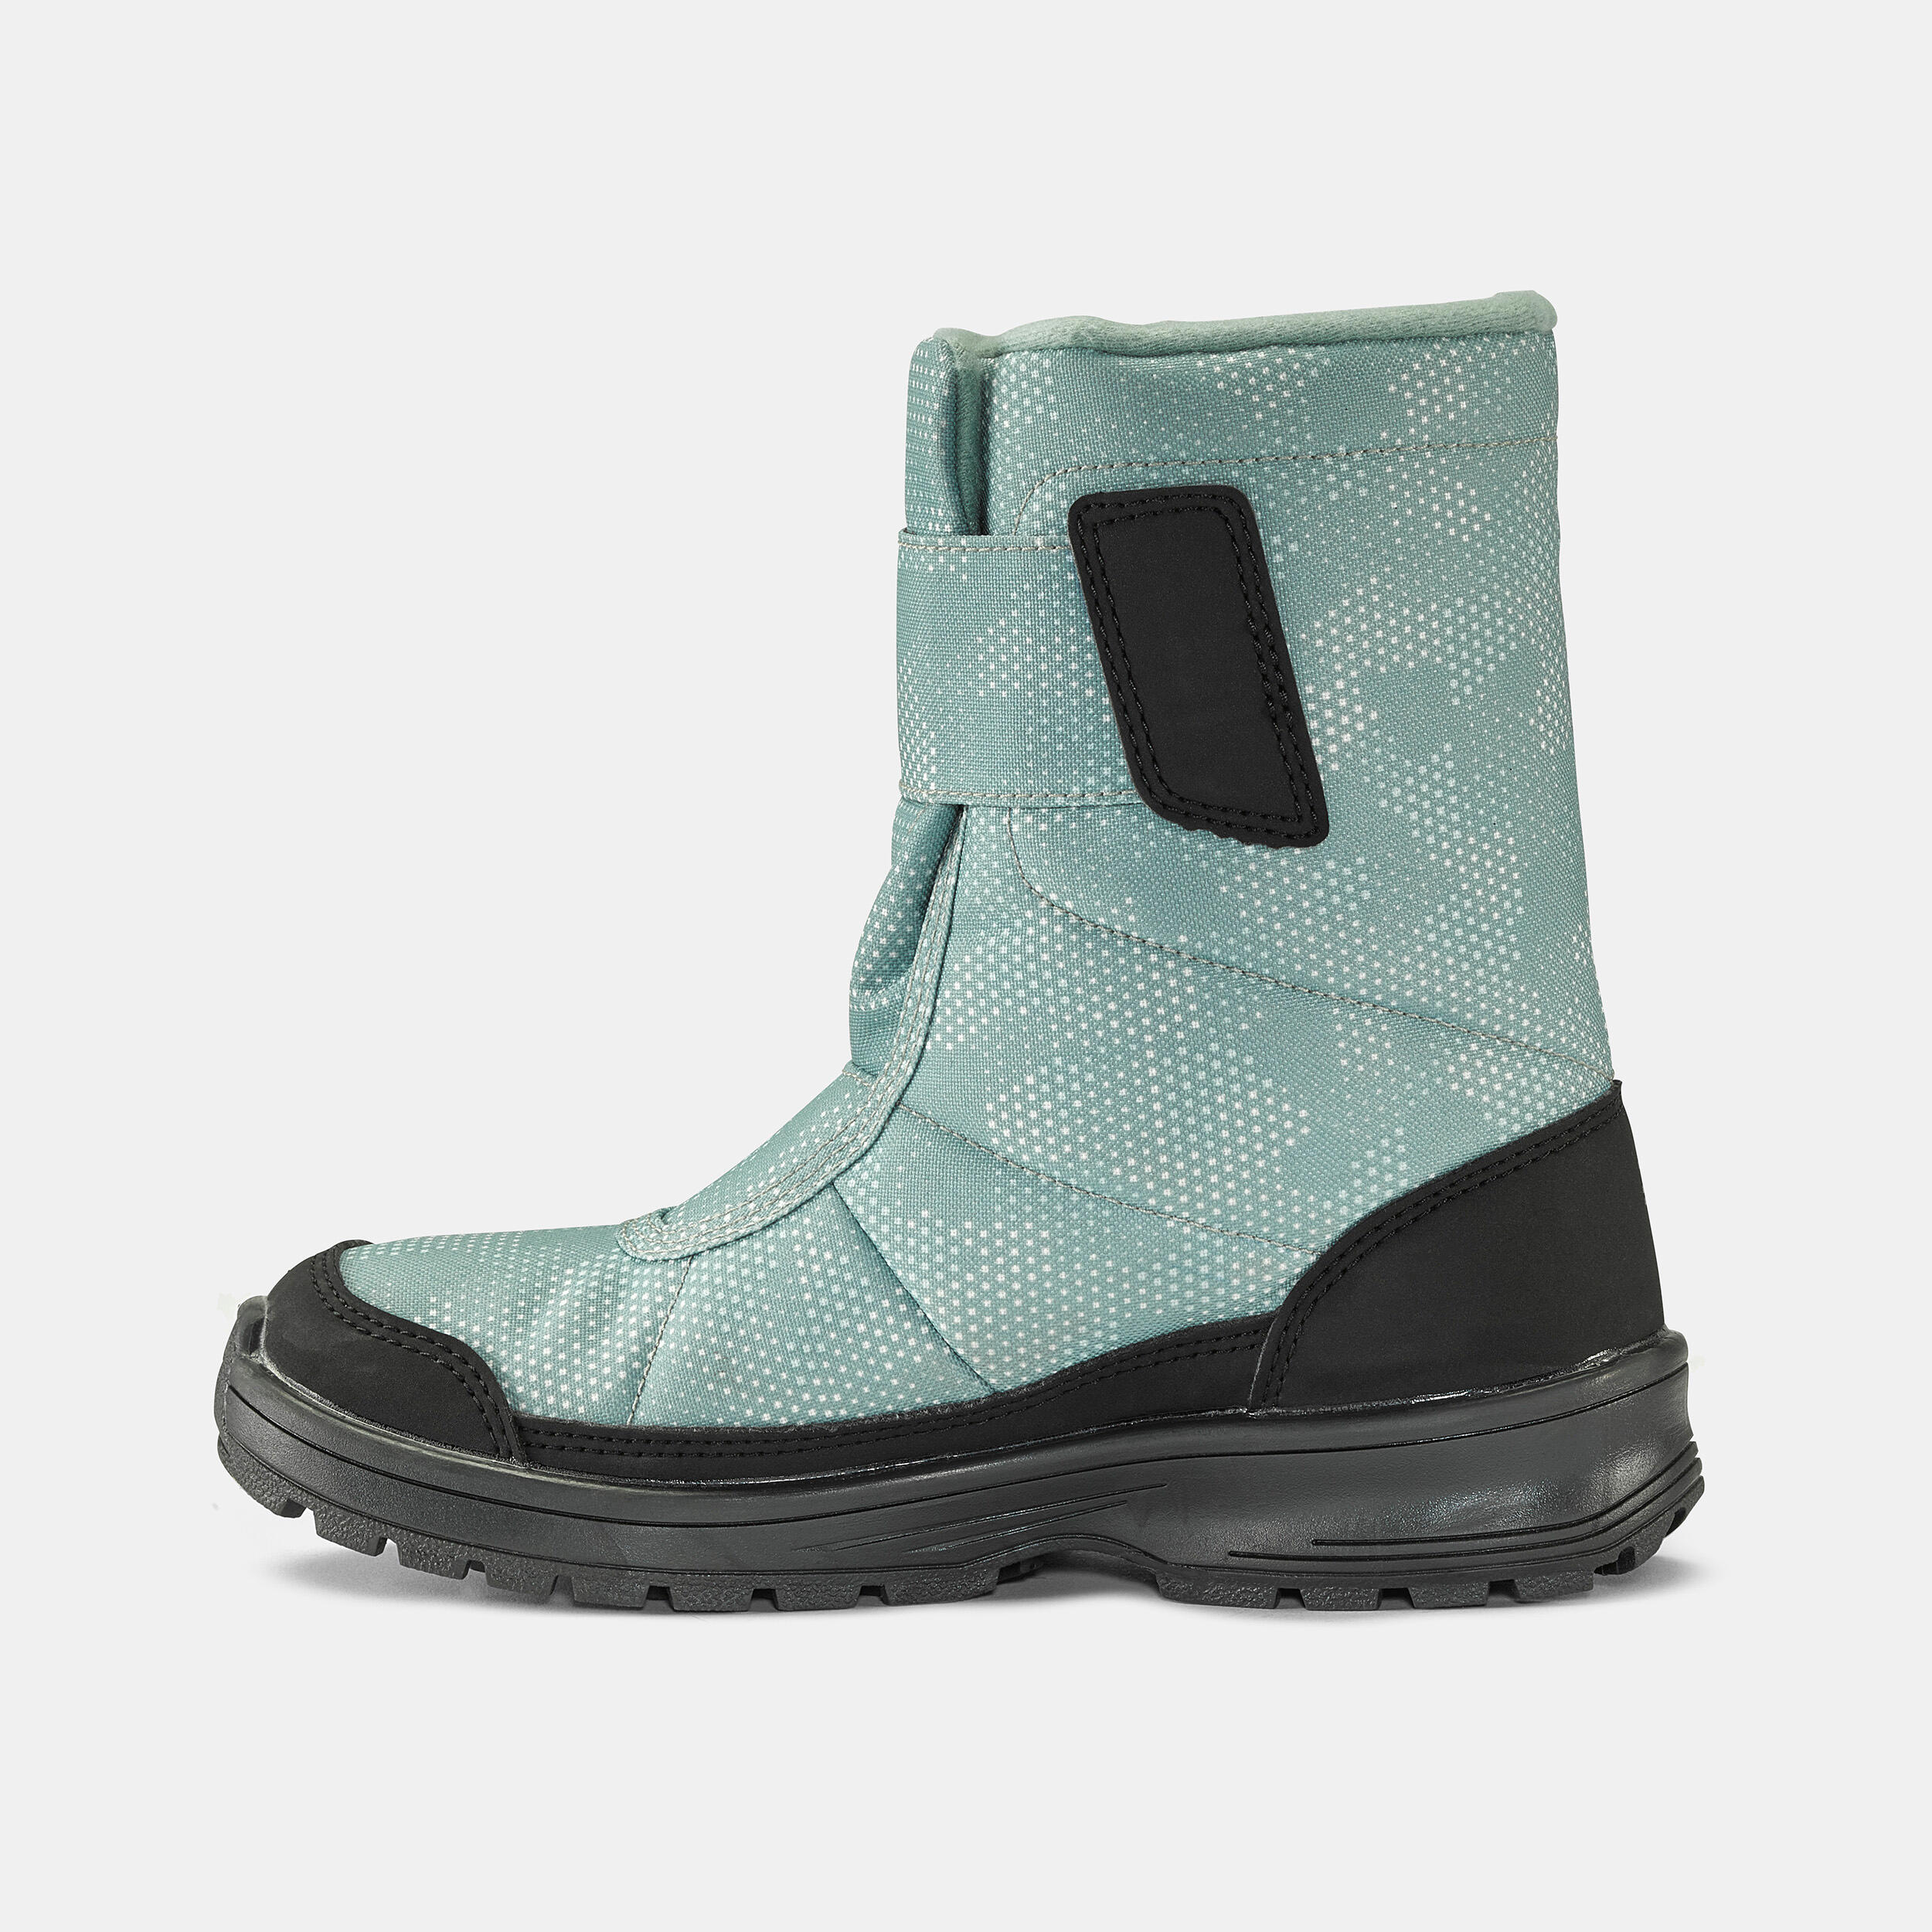 Kids’ warm waterproof snow hiking boots SH100 - Velcro Size 7 - 5.5  4/8